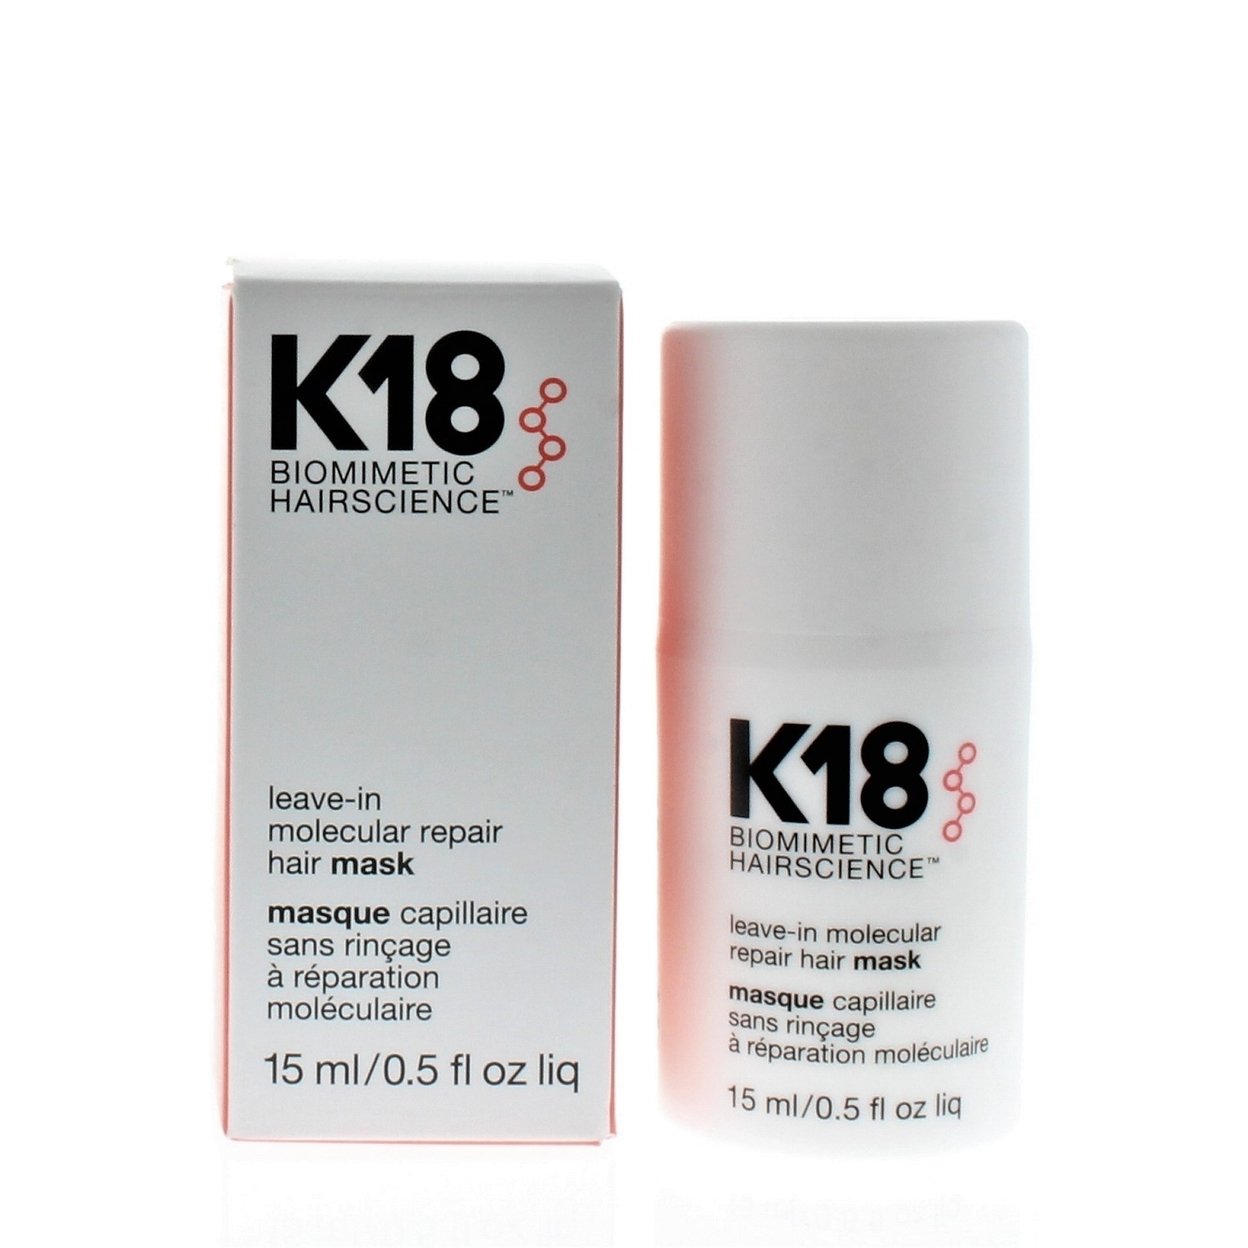 K18 Biomimetic Hairscience Leave-In Molecular Repair Hair Mask 0.5oz/15ml